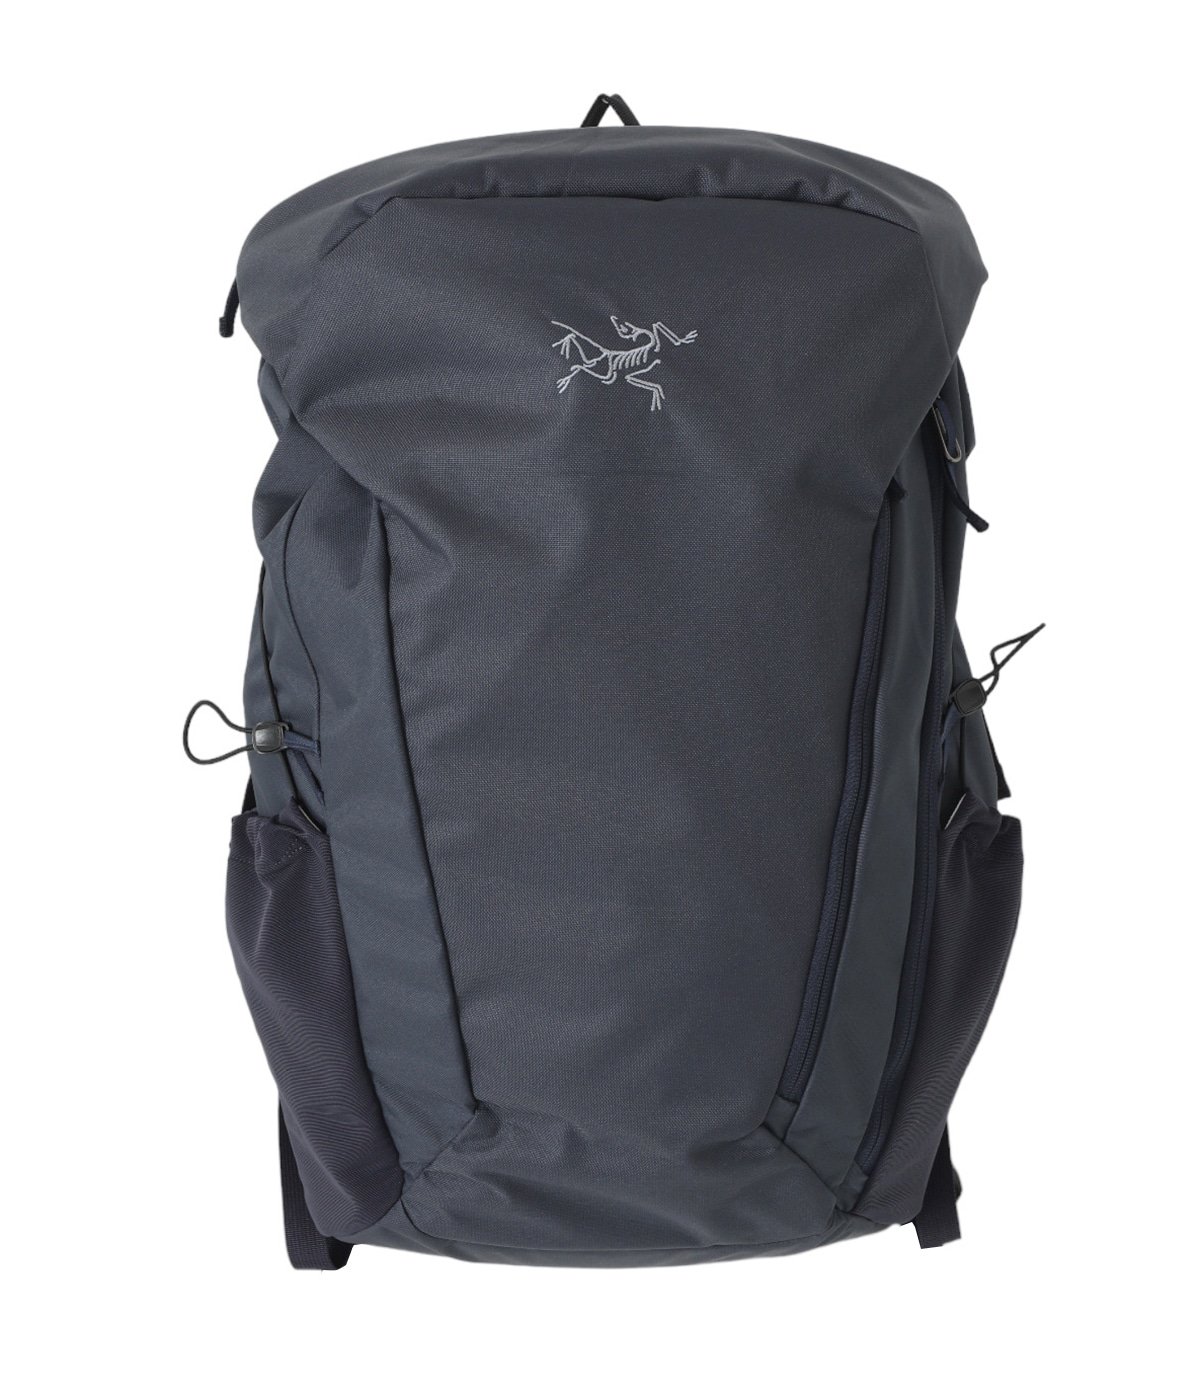 Mantis 30 Backpack | ARC'TERYX(アークテリクス) / バッグ バック